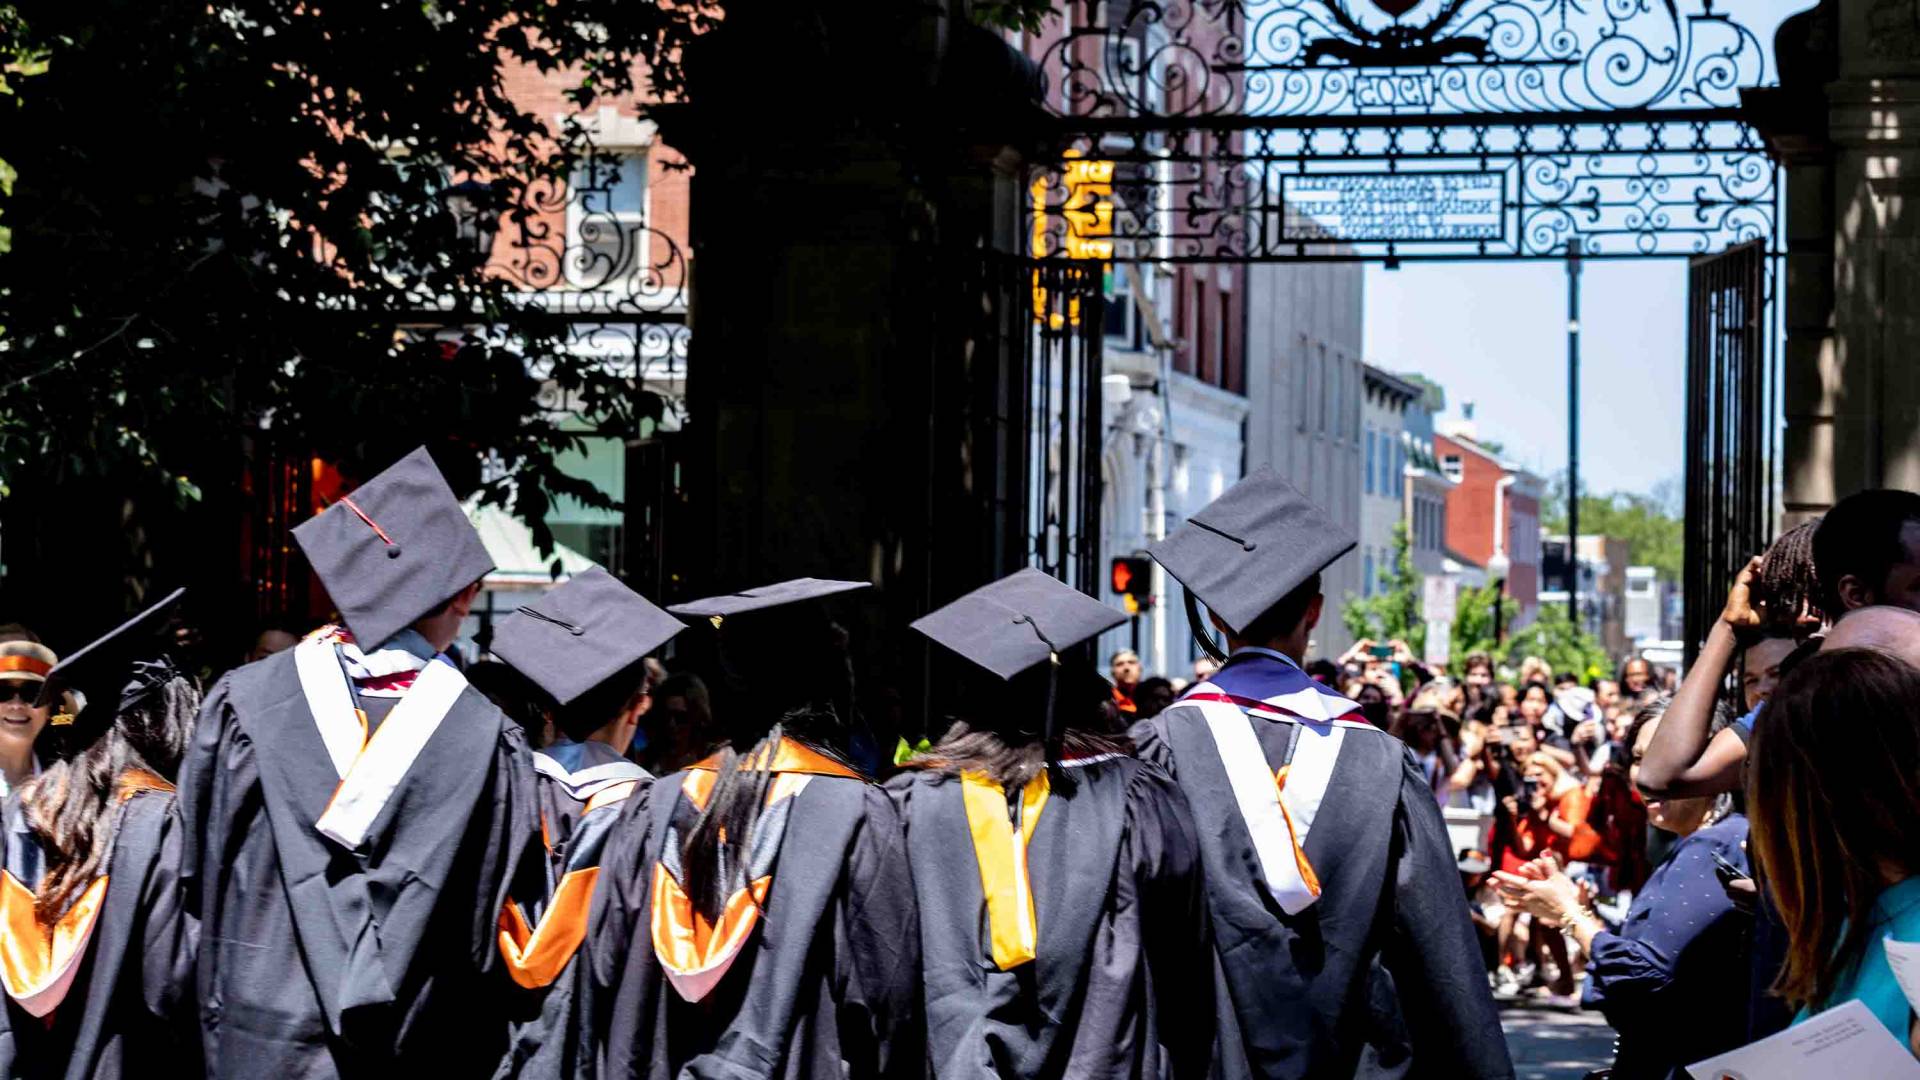 Graduating students walking towards the gate